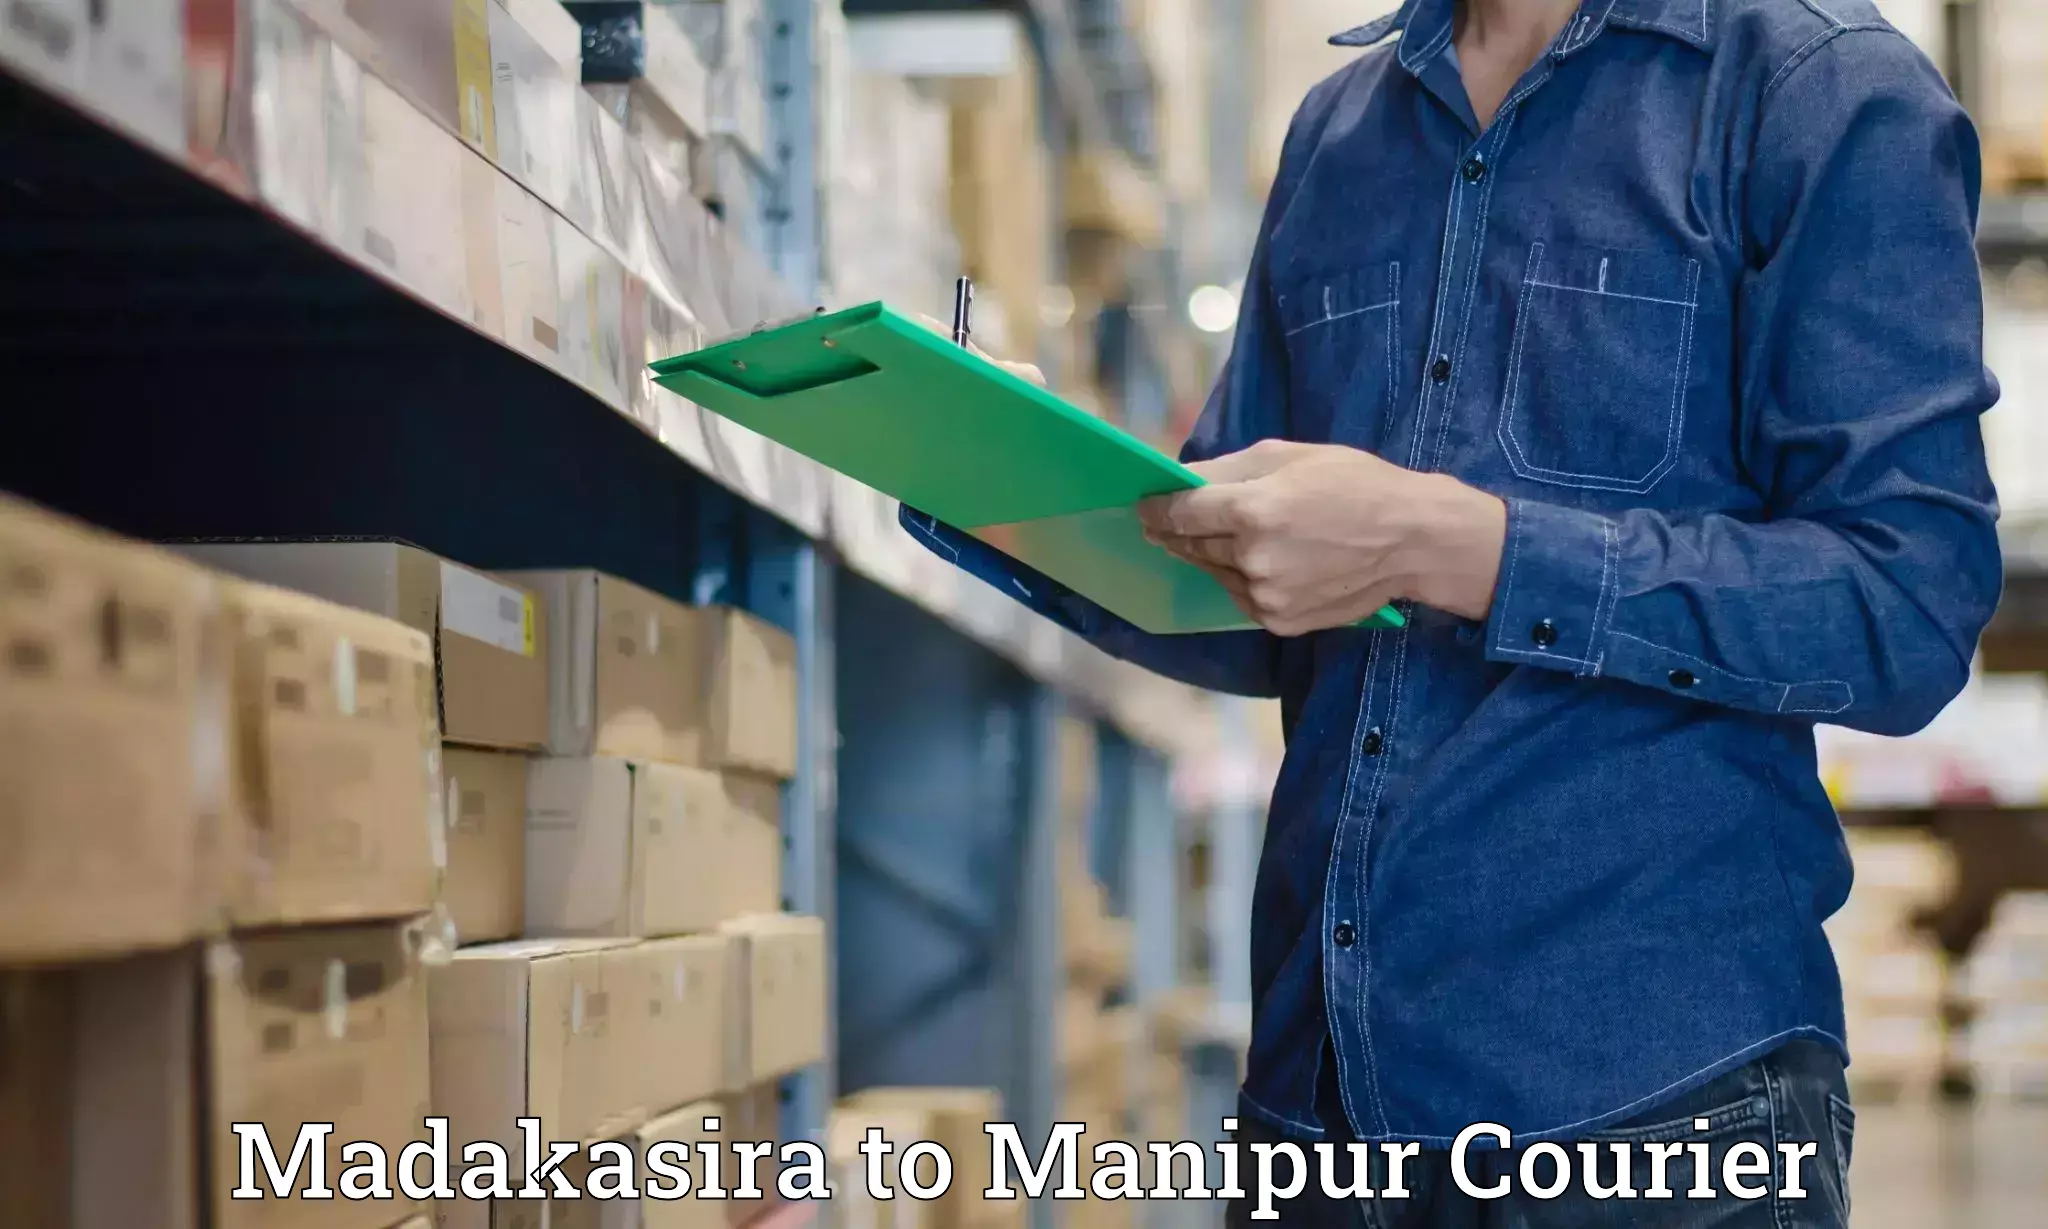 Professional courier services Madakasira to Manipur